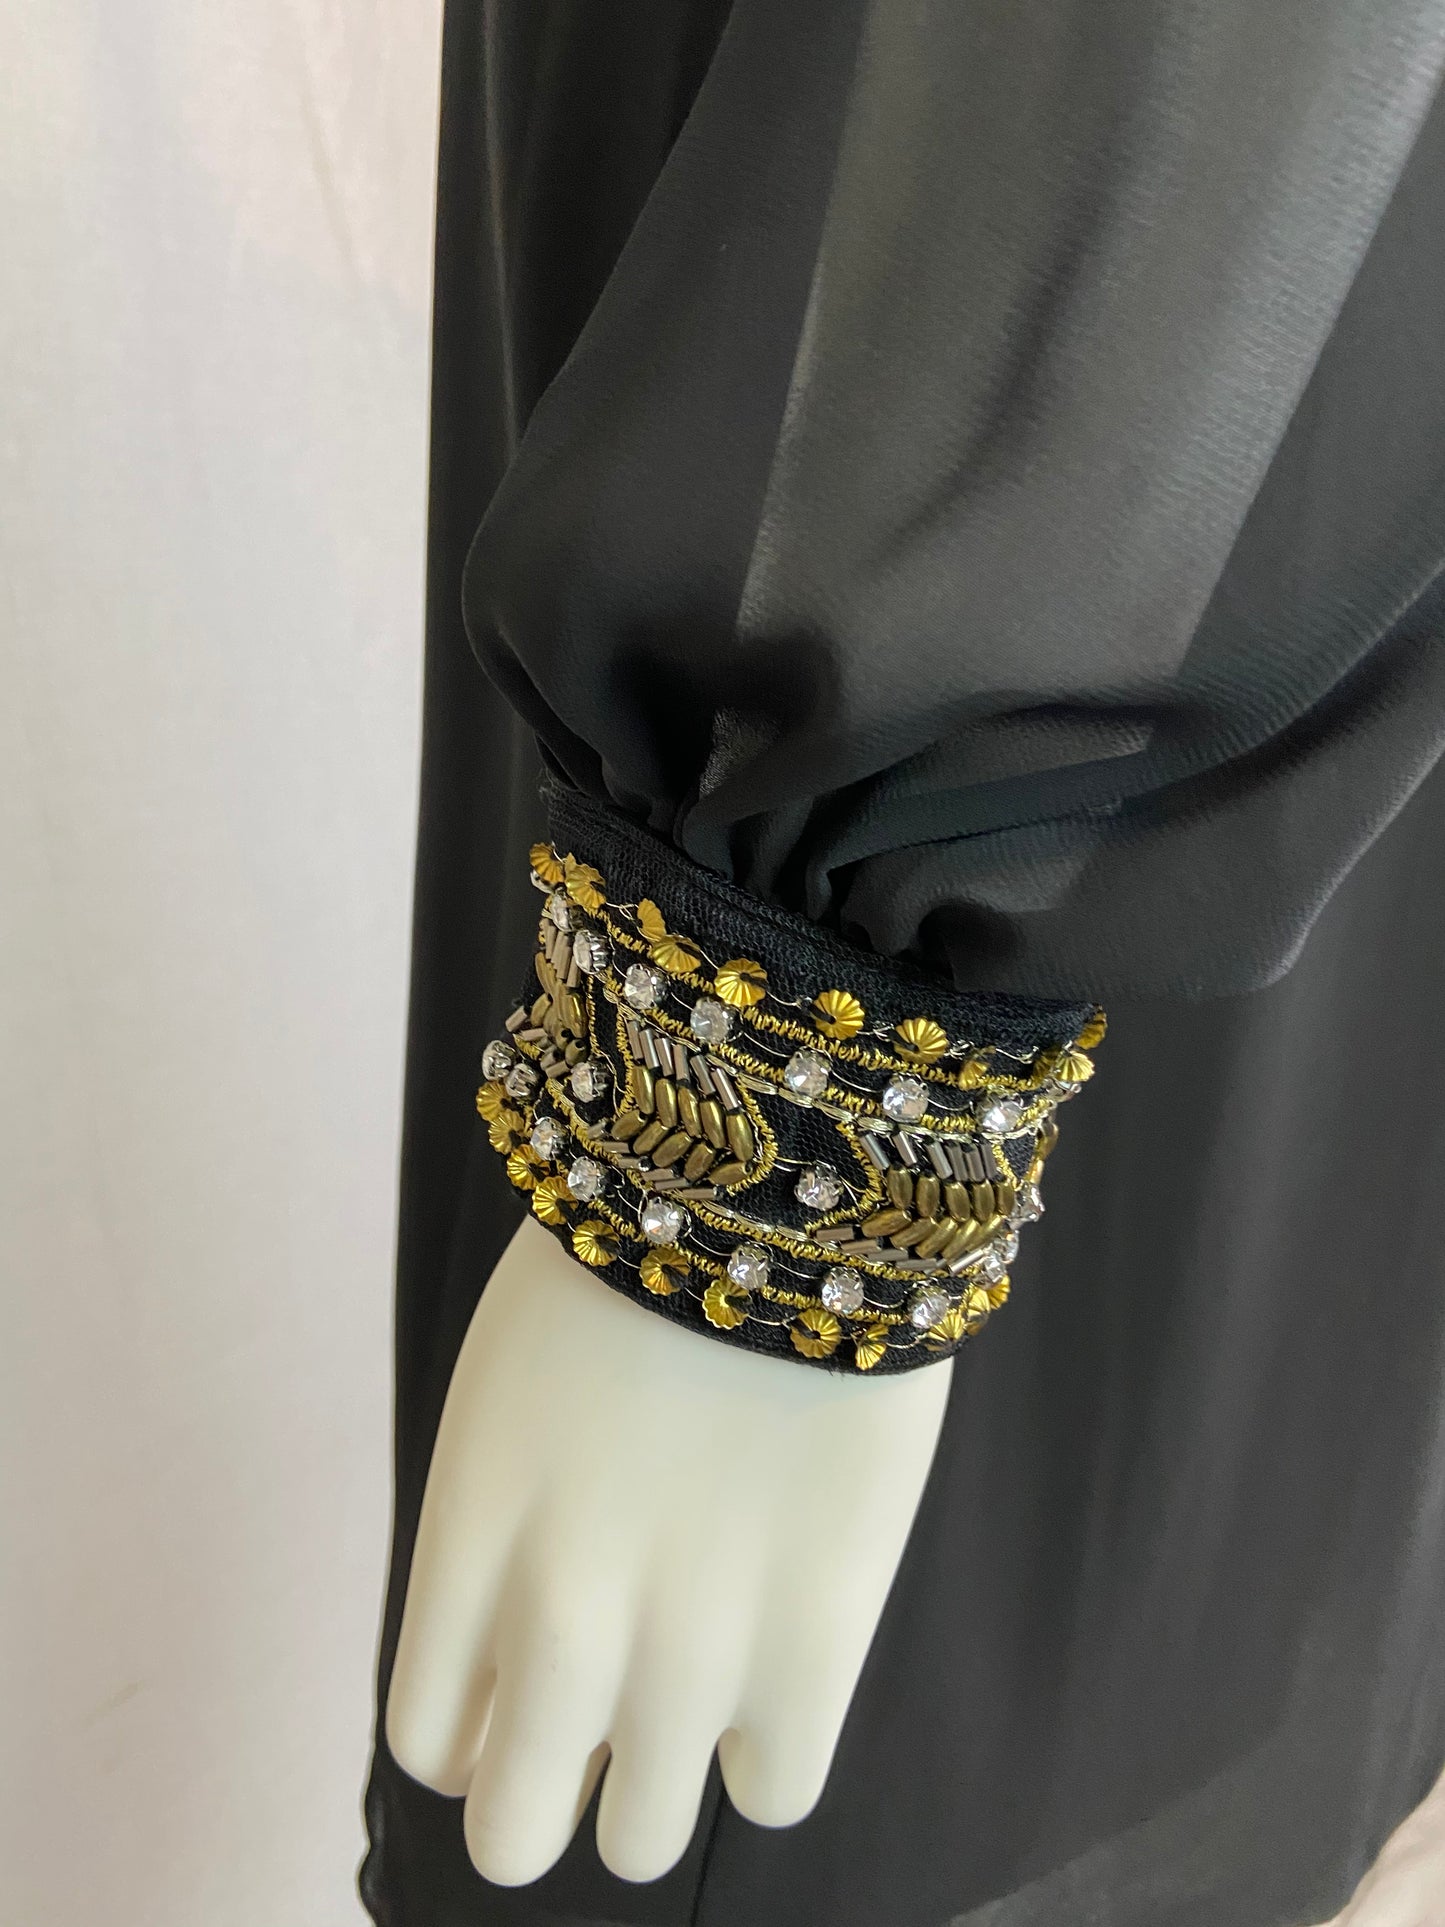 IN San Francisco Black Gold Beaded Sheer Dress Medium ABBY ESSIE STUDIOS